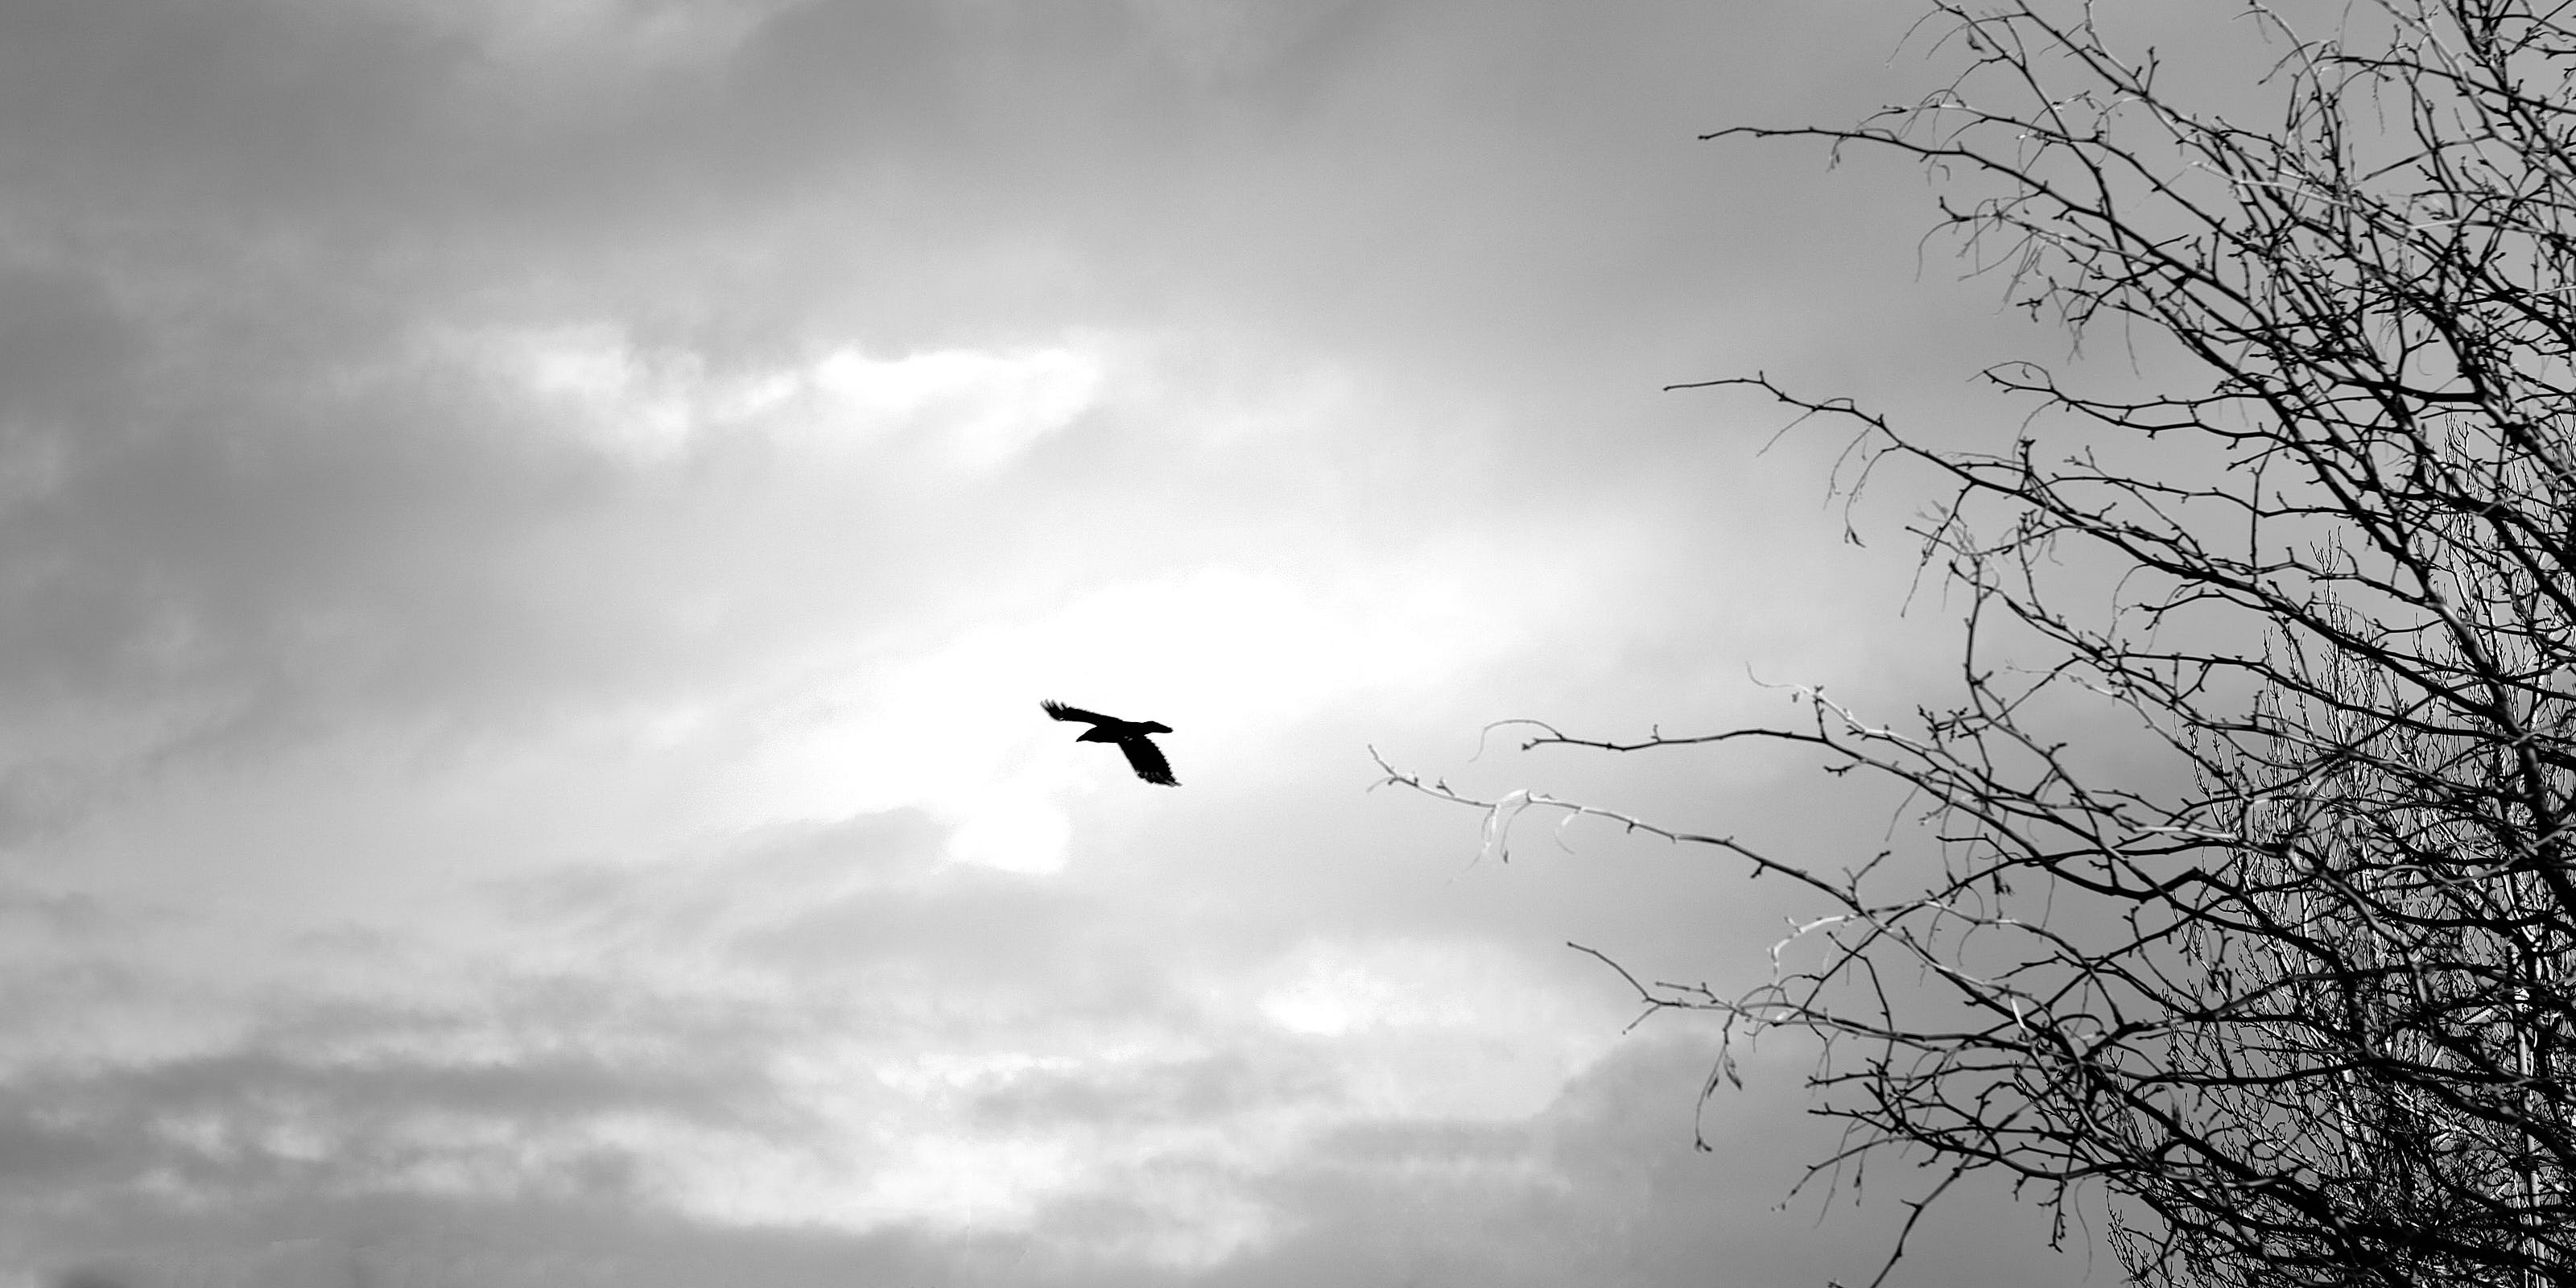 A raven flies past a tree